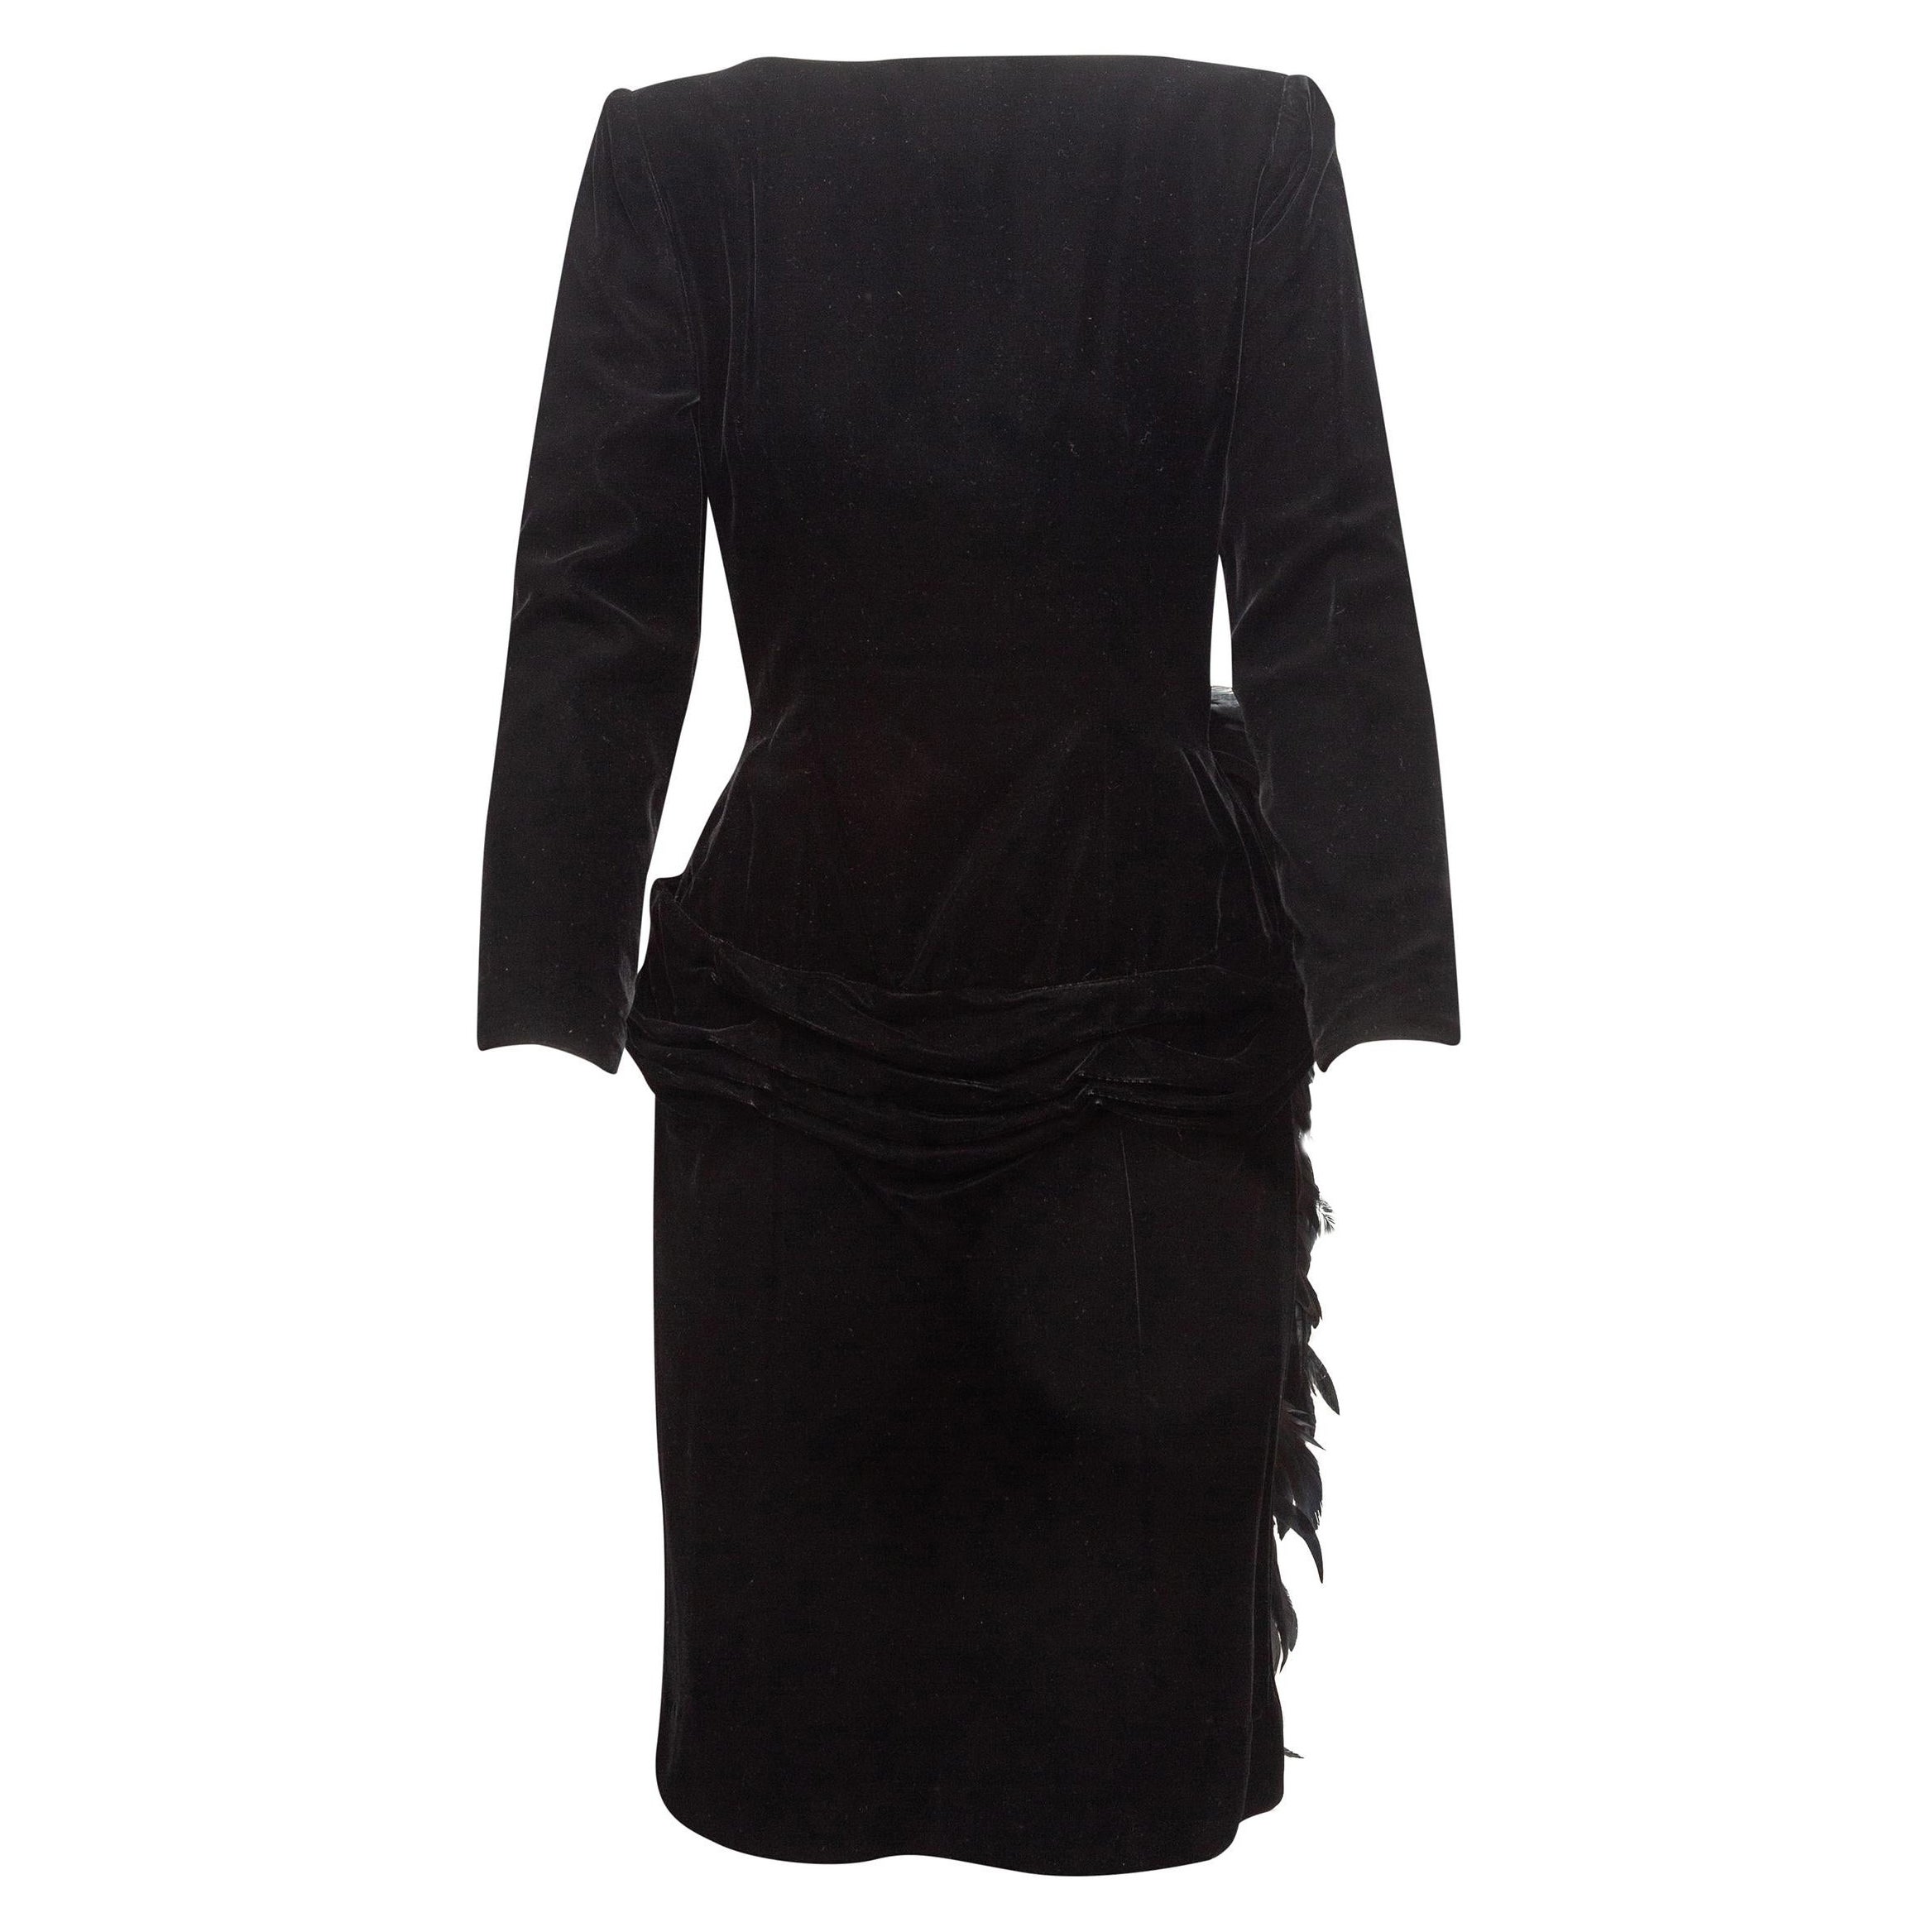 Oscar de la Renta Black Velvet Feather-Accented Dress